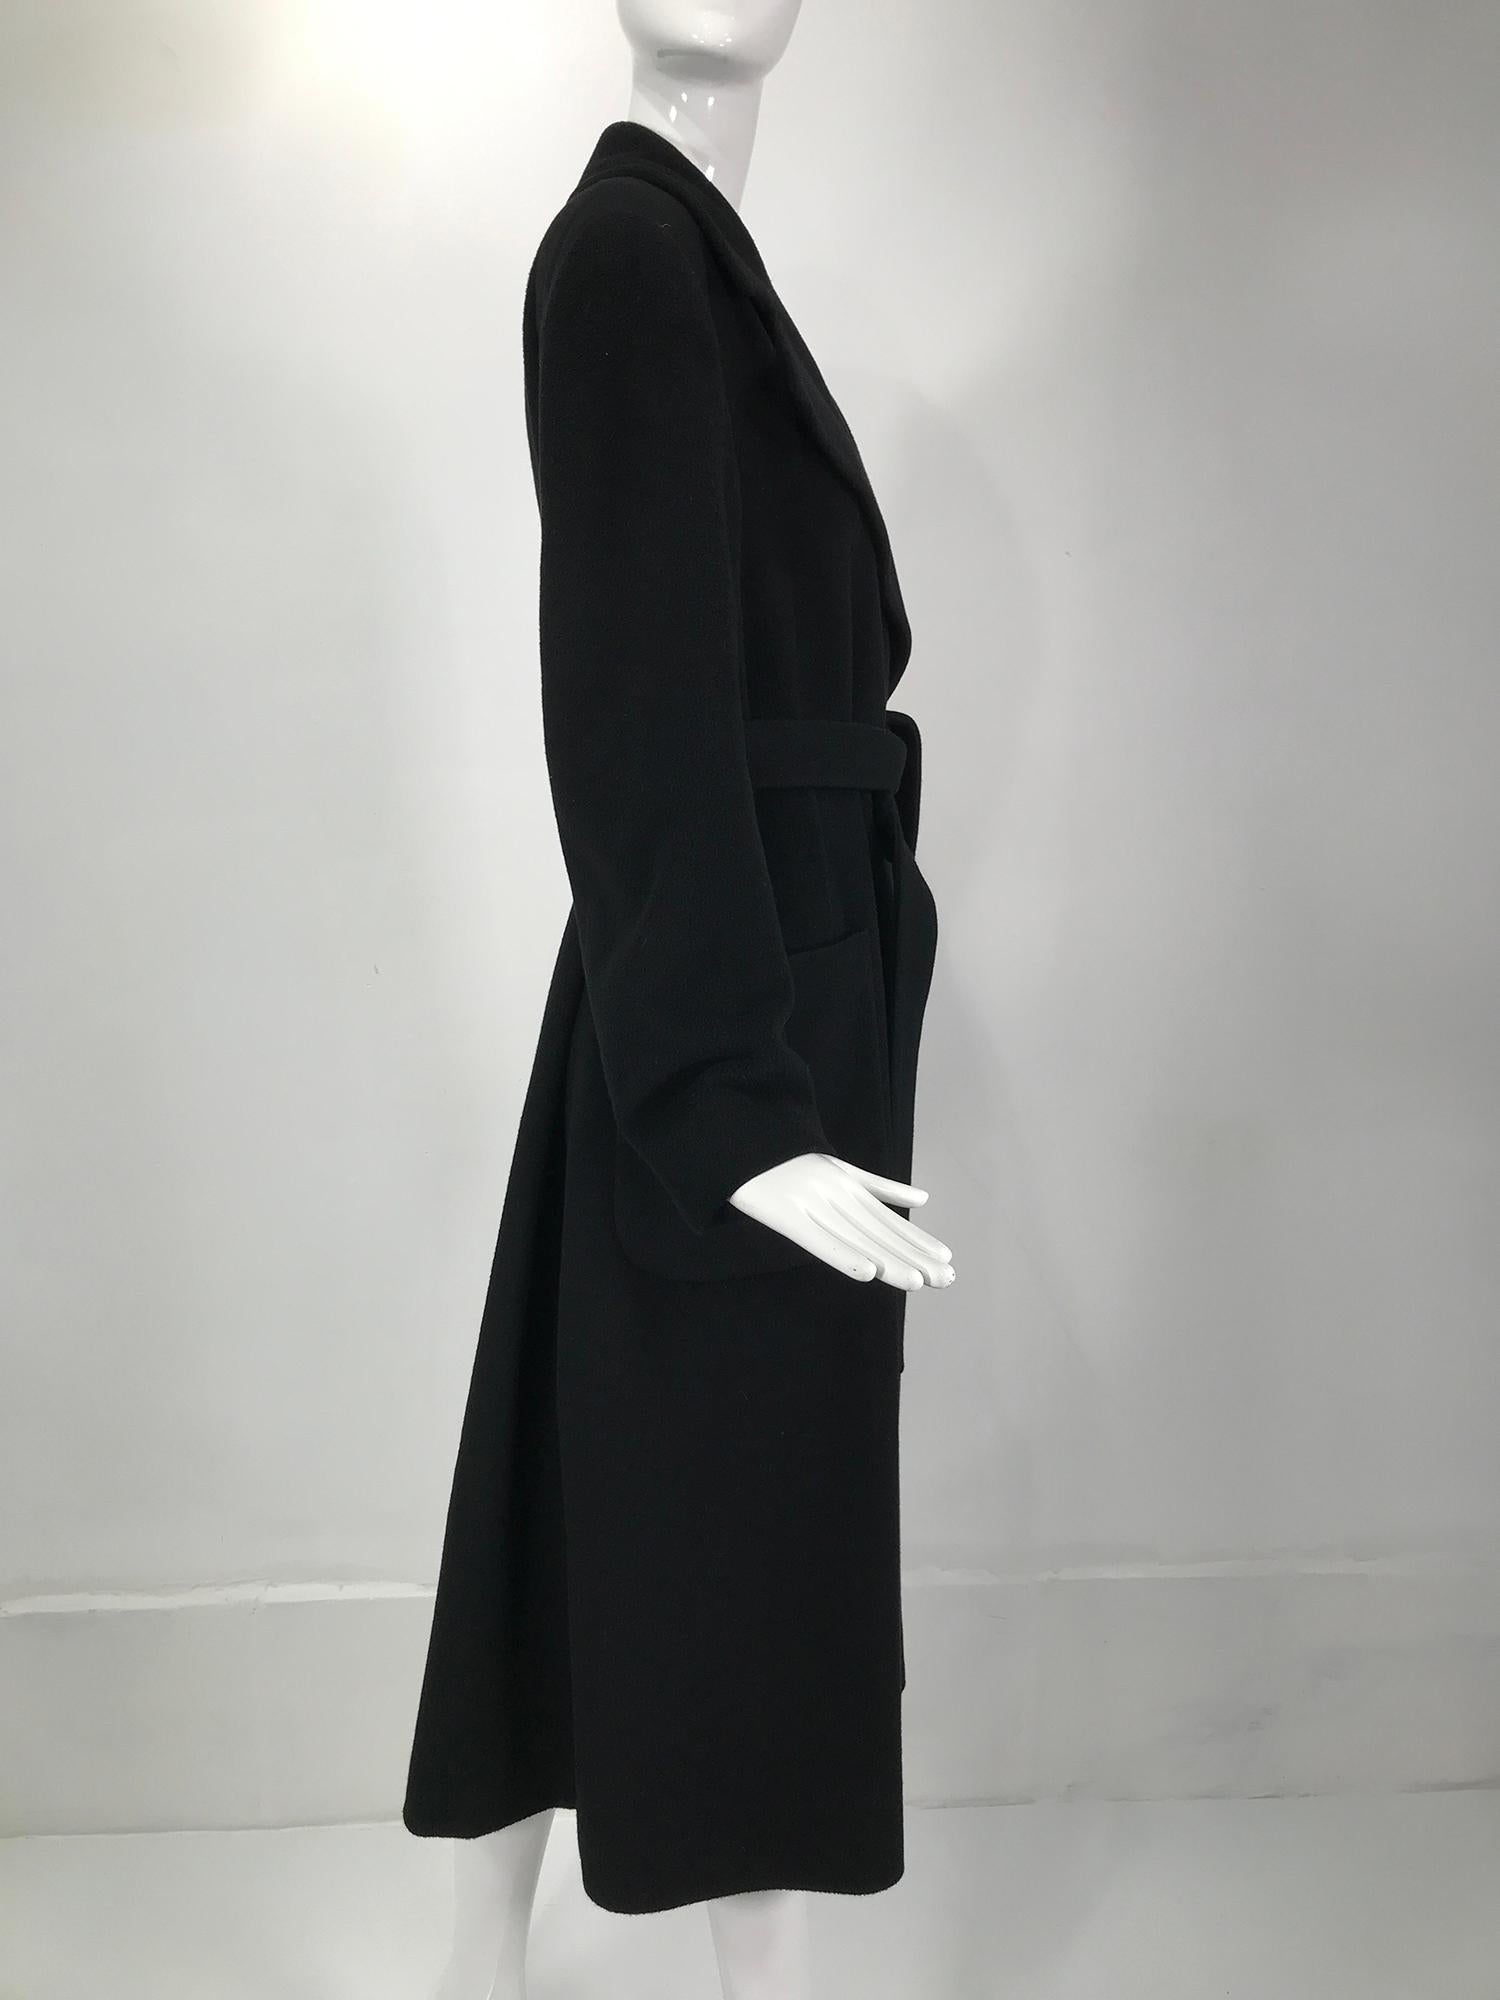 donna karan coat